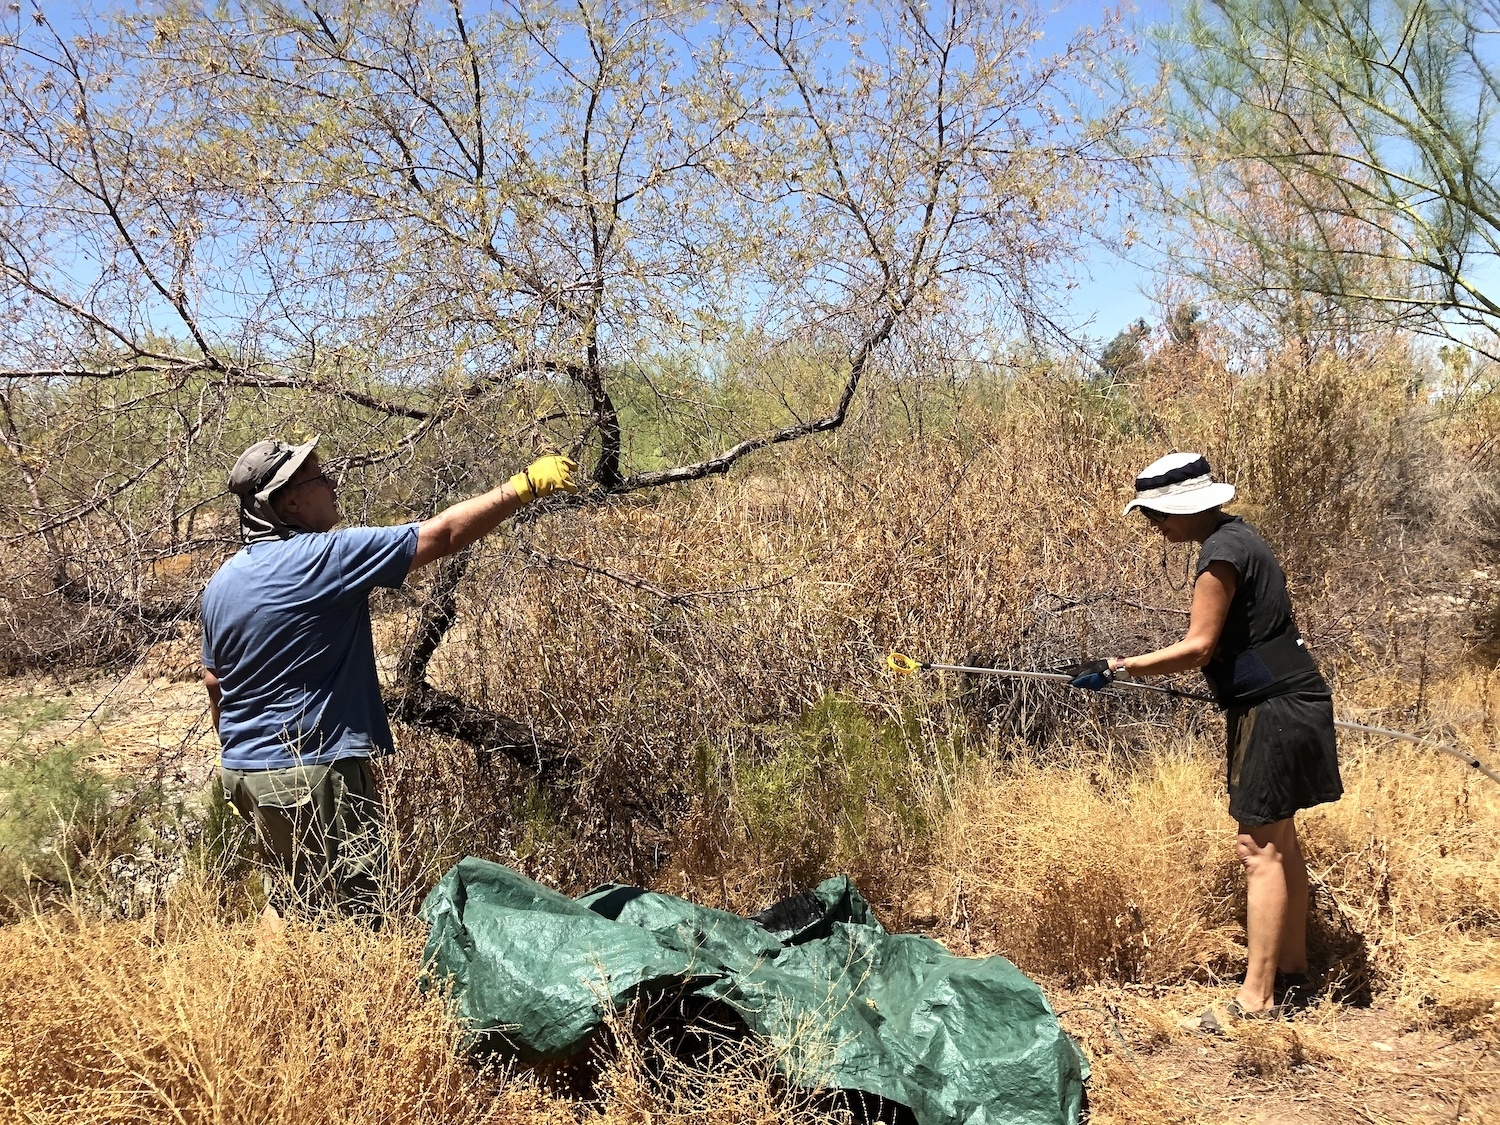 Kelly Athena and Jackson Richards plucking mesquite in Tempe, Arizona. September 2020